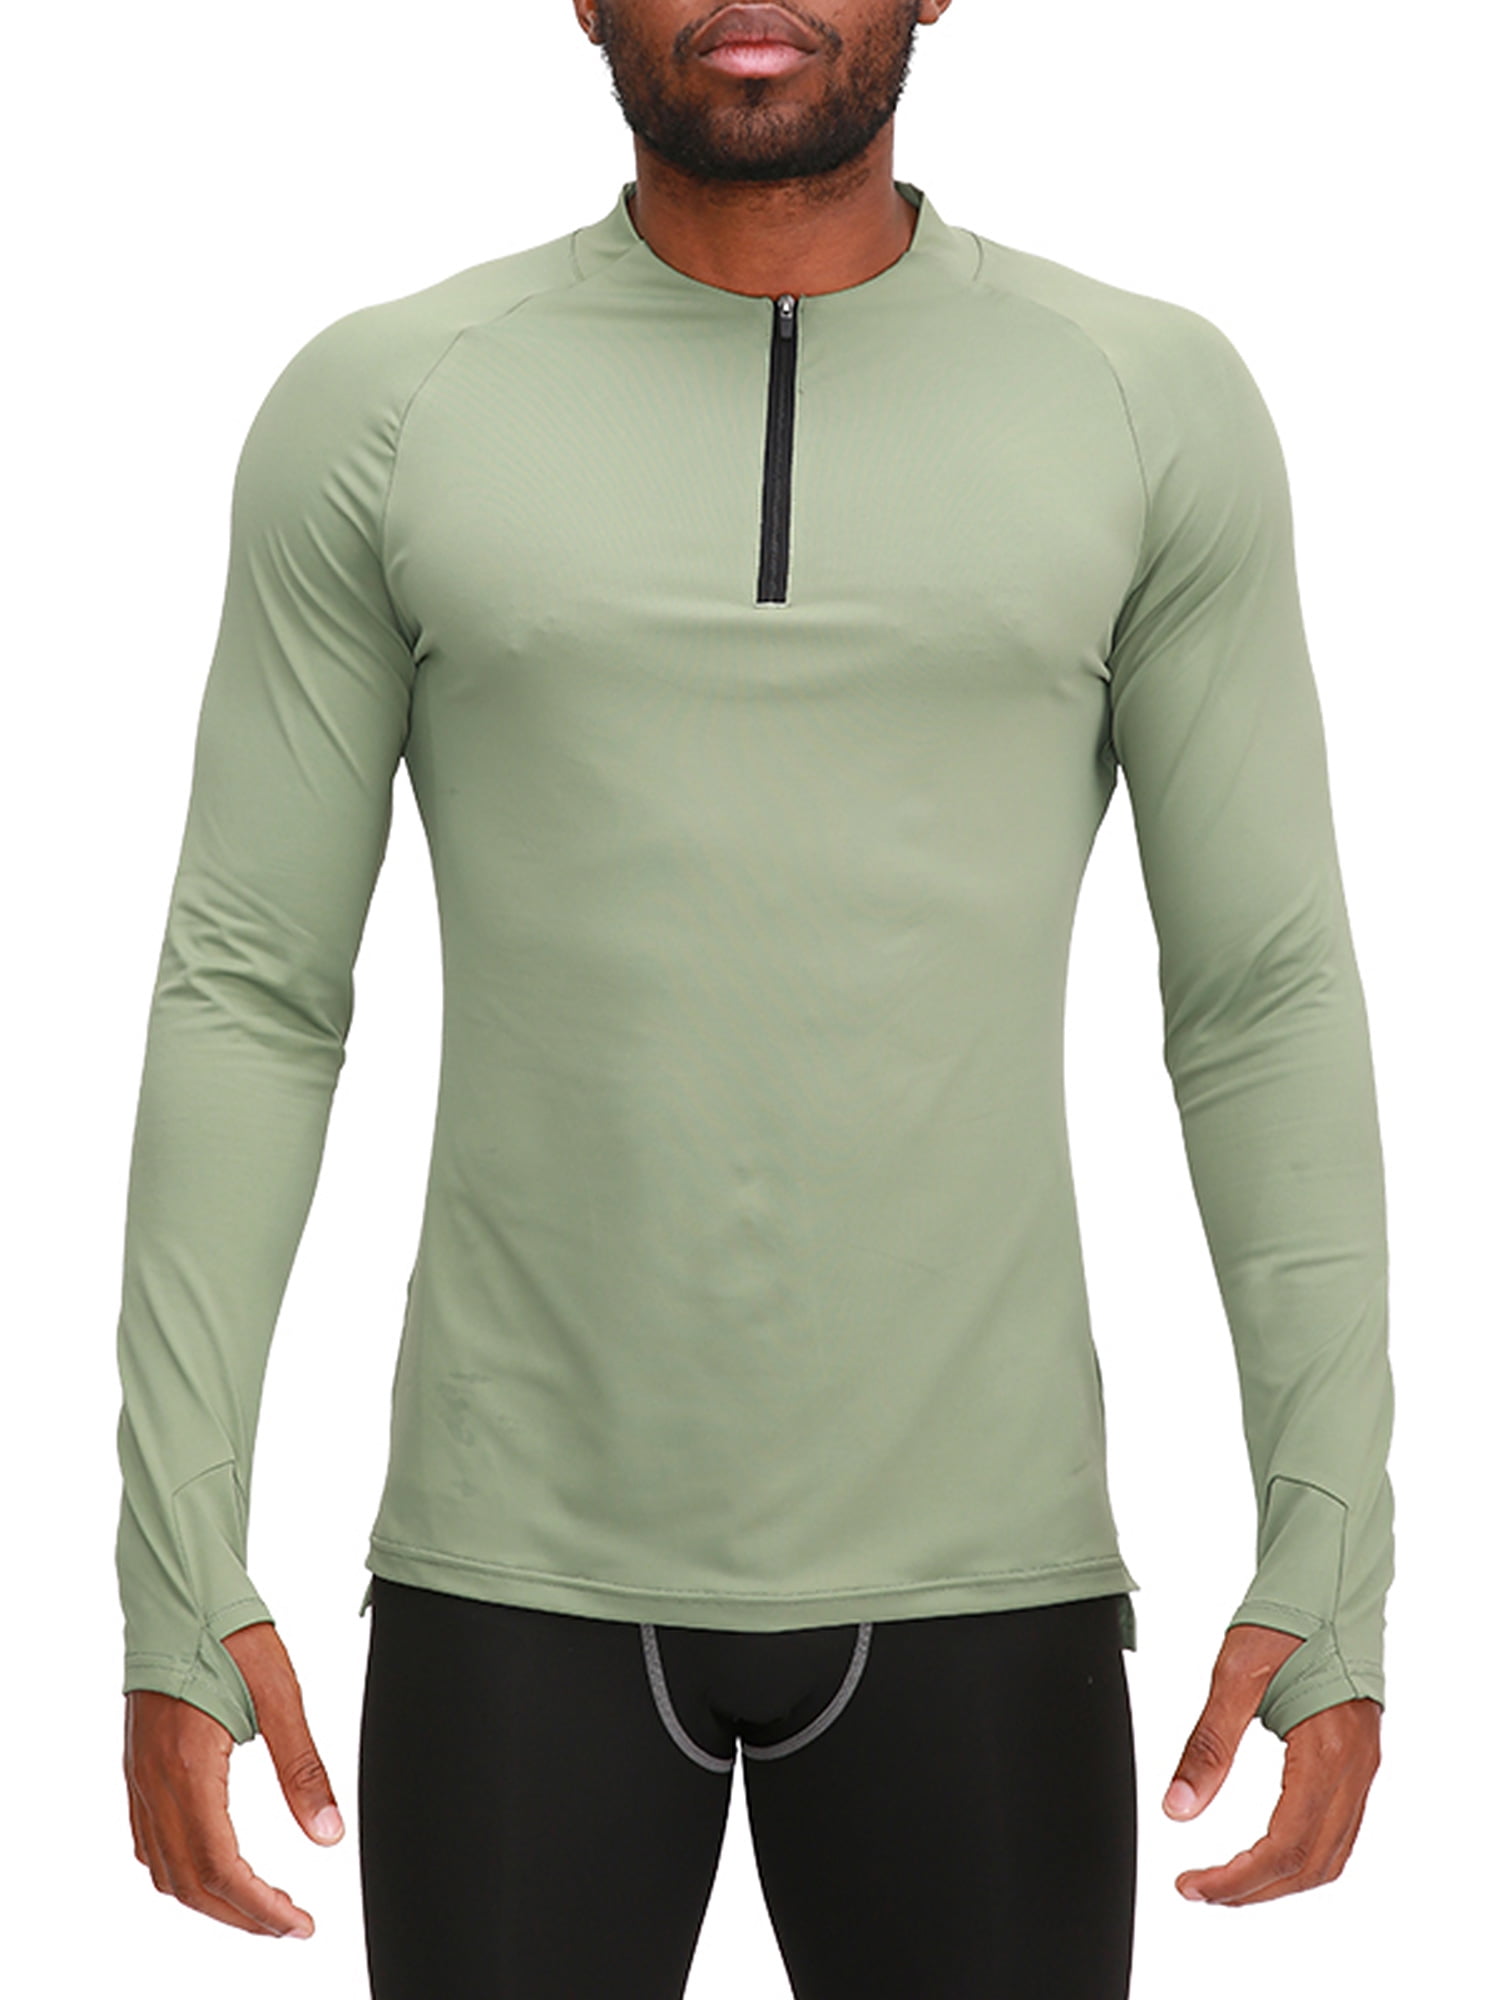 Thumb Holes Workout Long Sleeve Quick Dry Athletic T-Shirts BALEAF Mens Running Lightweight Shirts UPF 50 